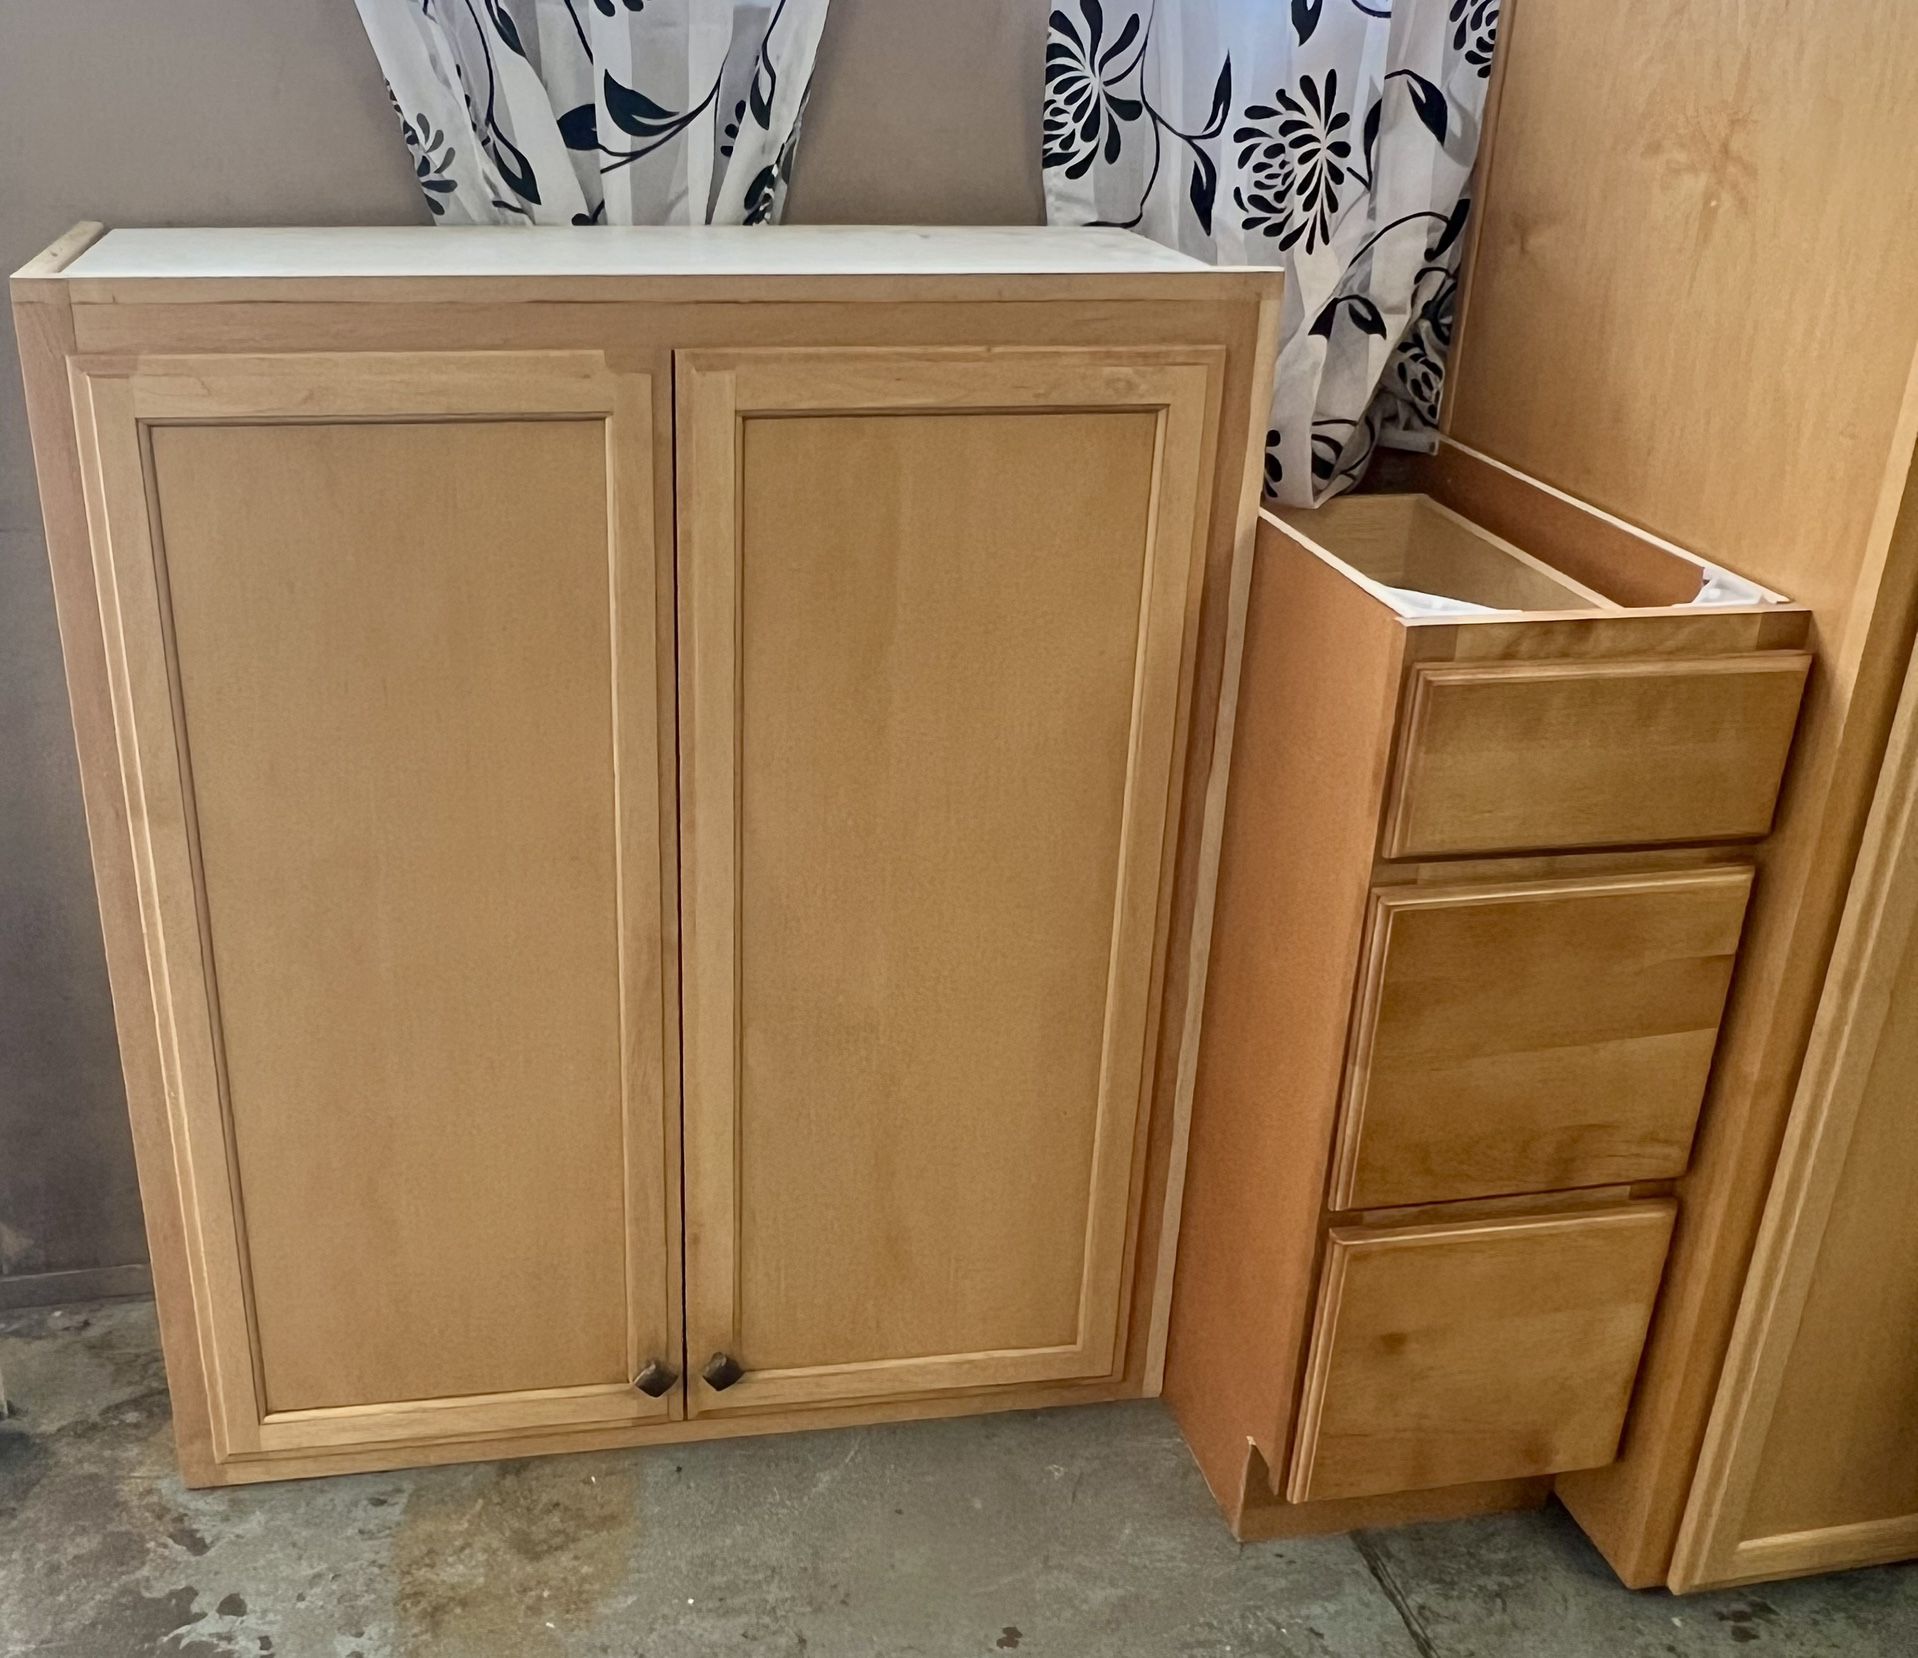 Three Complete Kitchen Cabinets